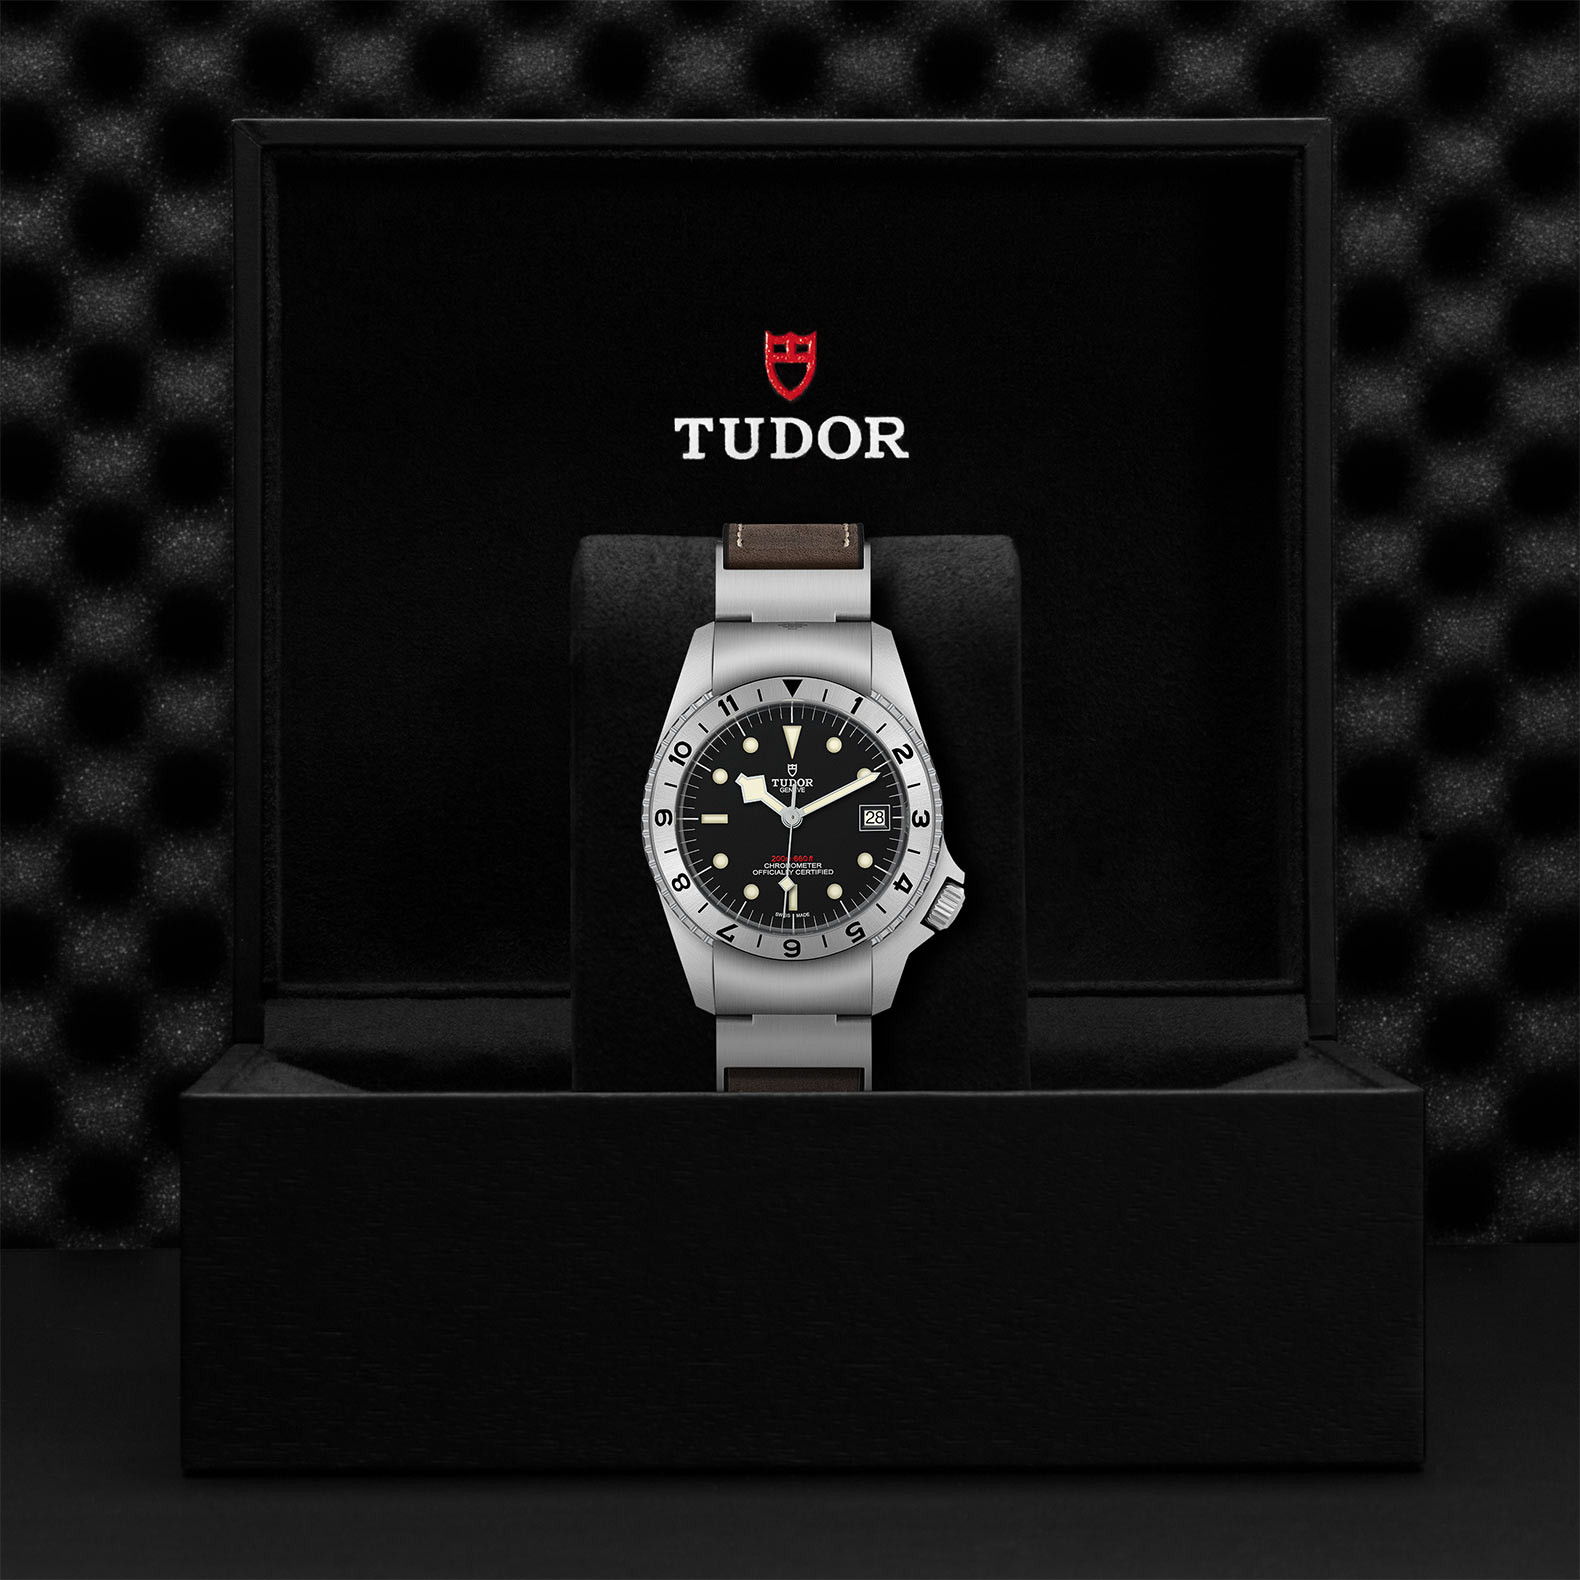 TUDOR Black Bay P01 Watch in Presentation Box